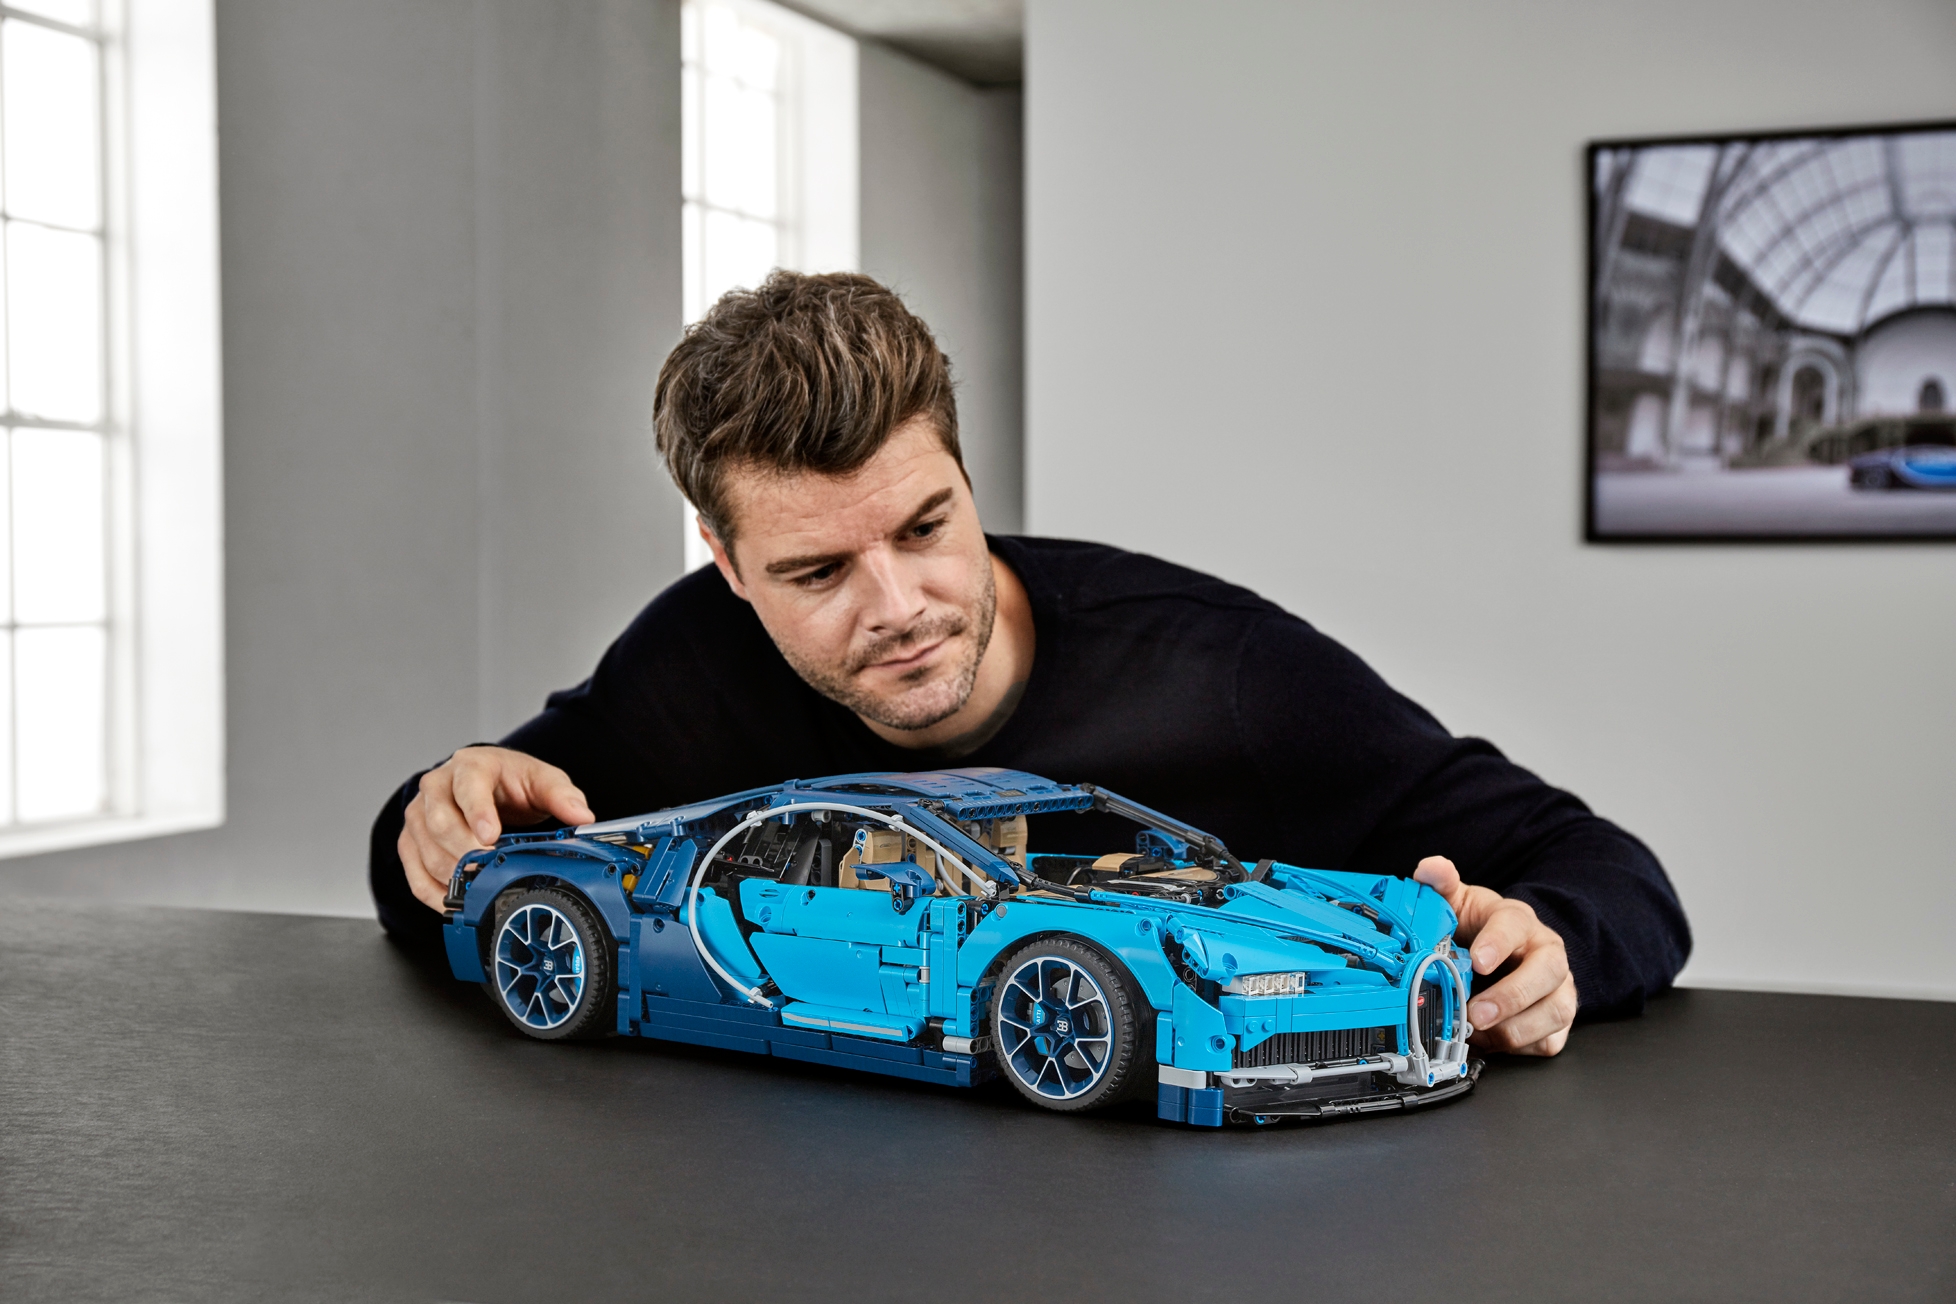 LEGO Bugatti Chiron: how was the 3,599-piece model designed?